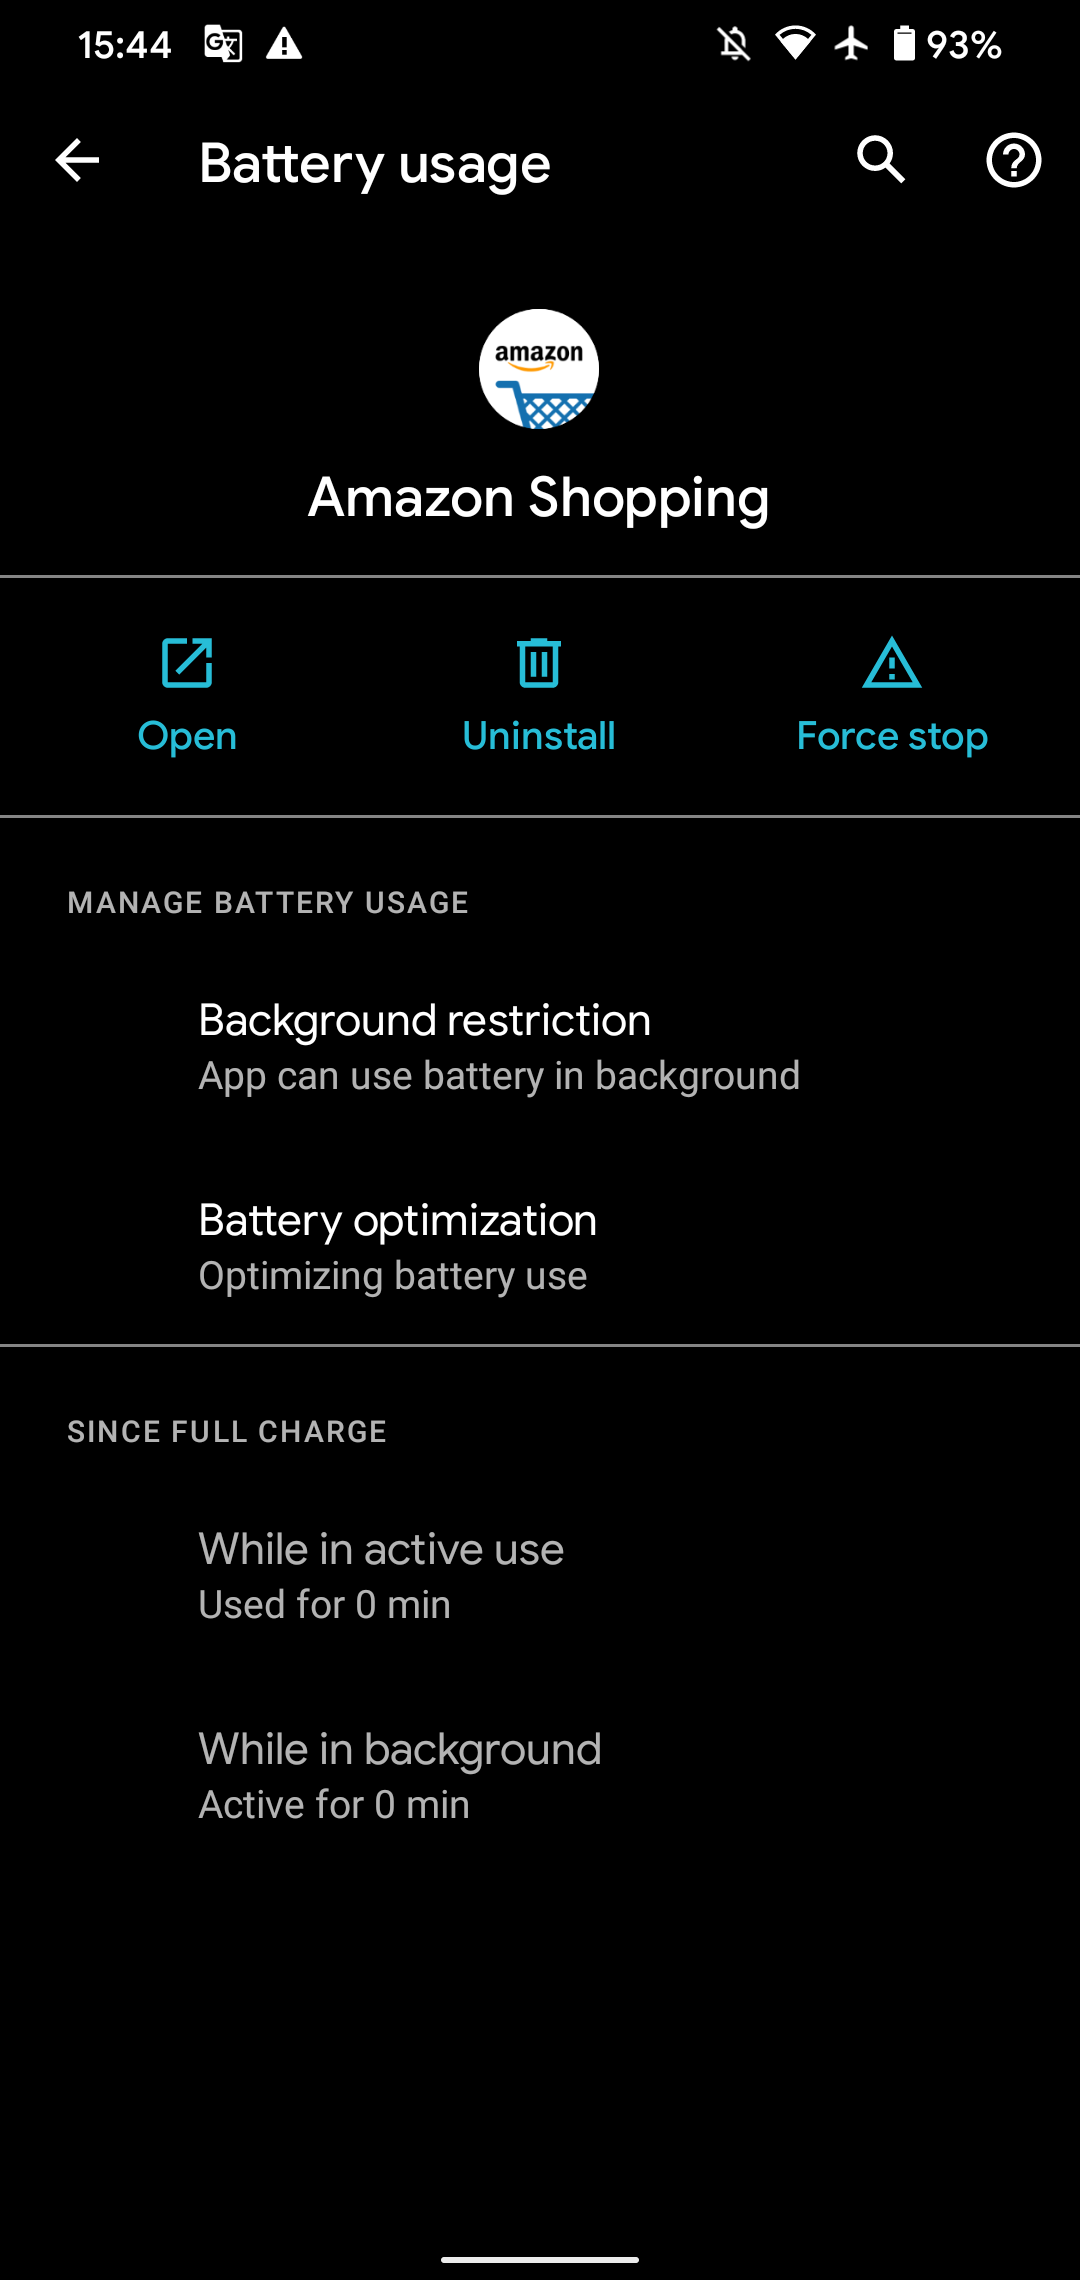 Menu de aplicativos de bateria Android